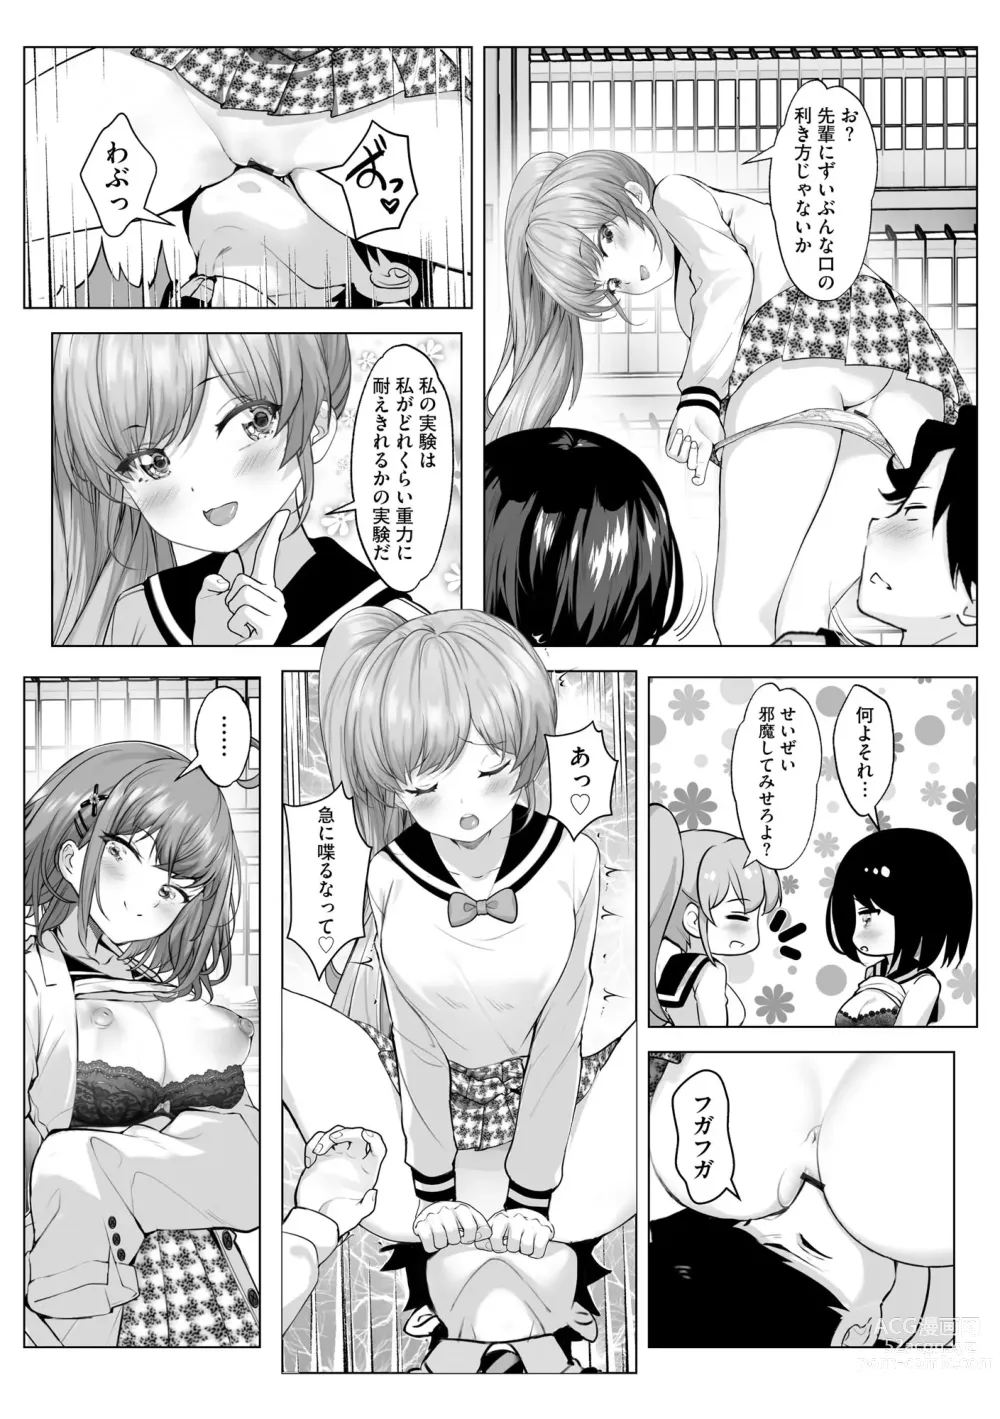 Page 375 of manga Cyberia Plus Vol. 15